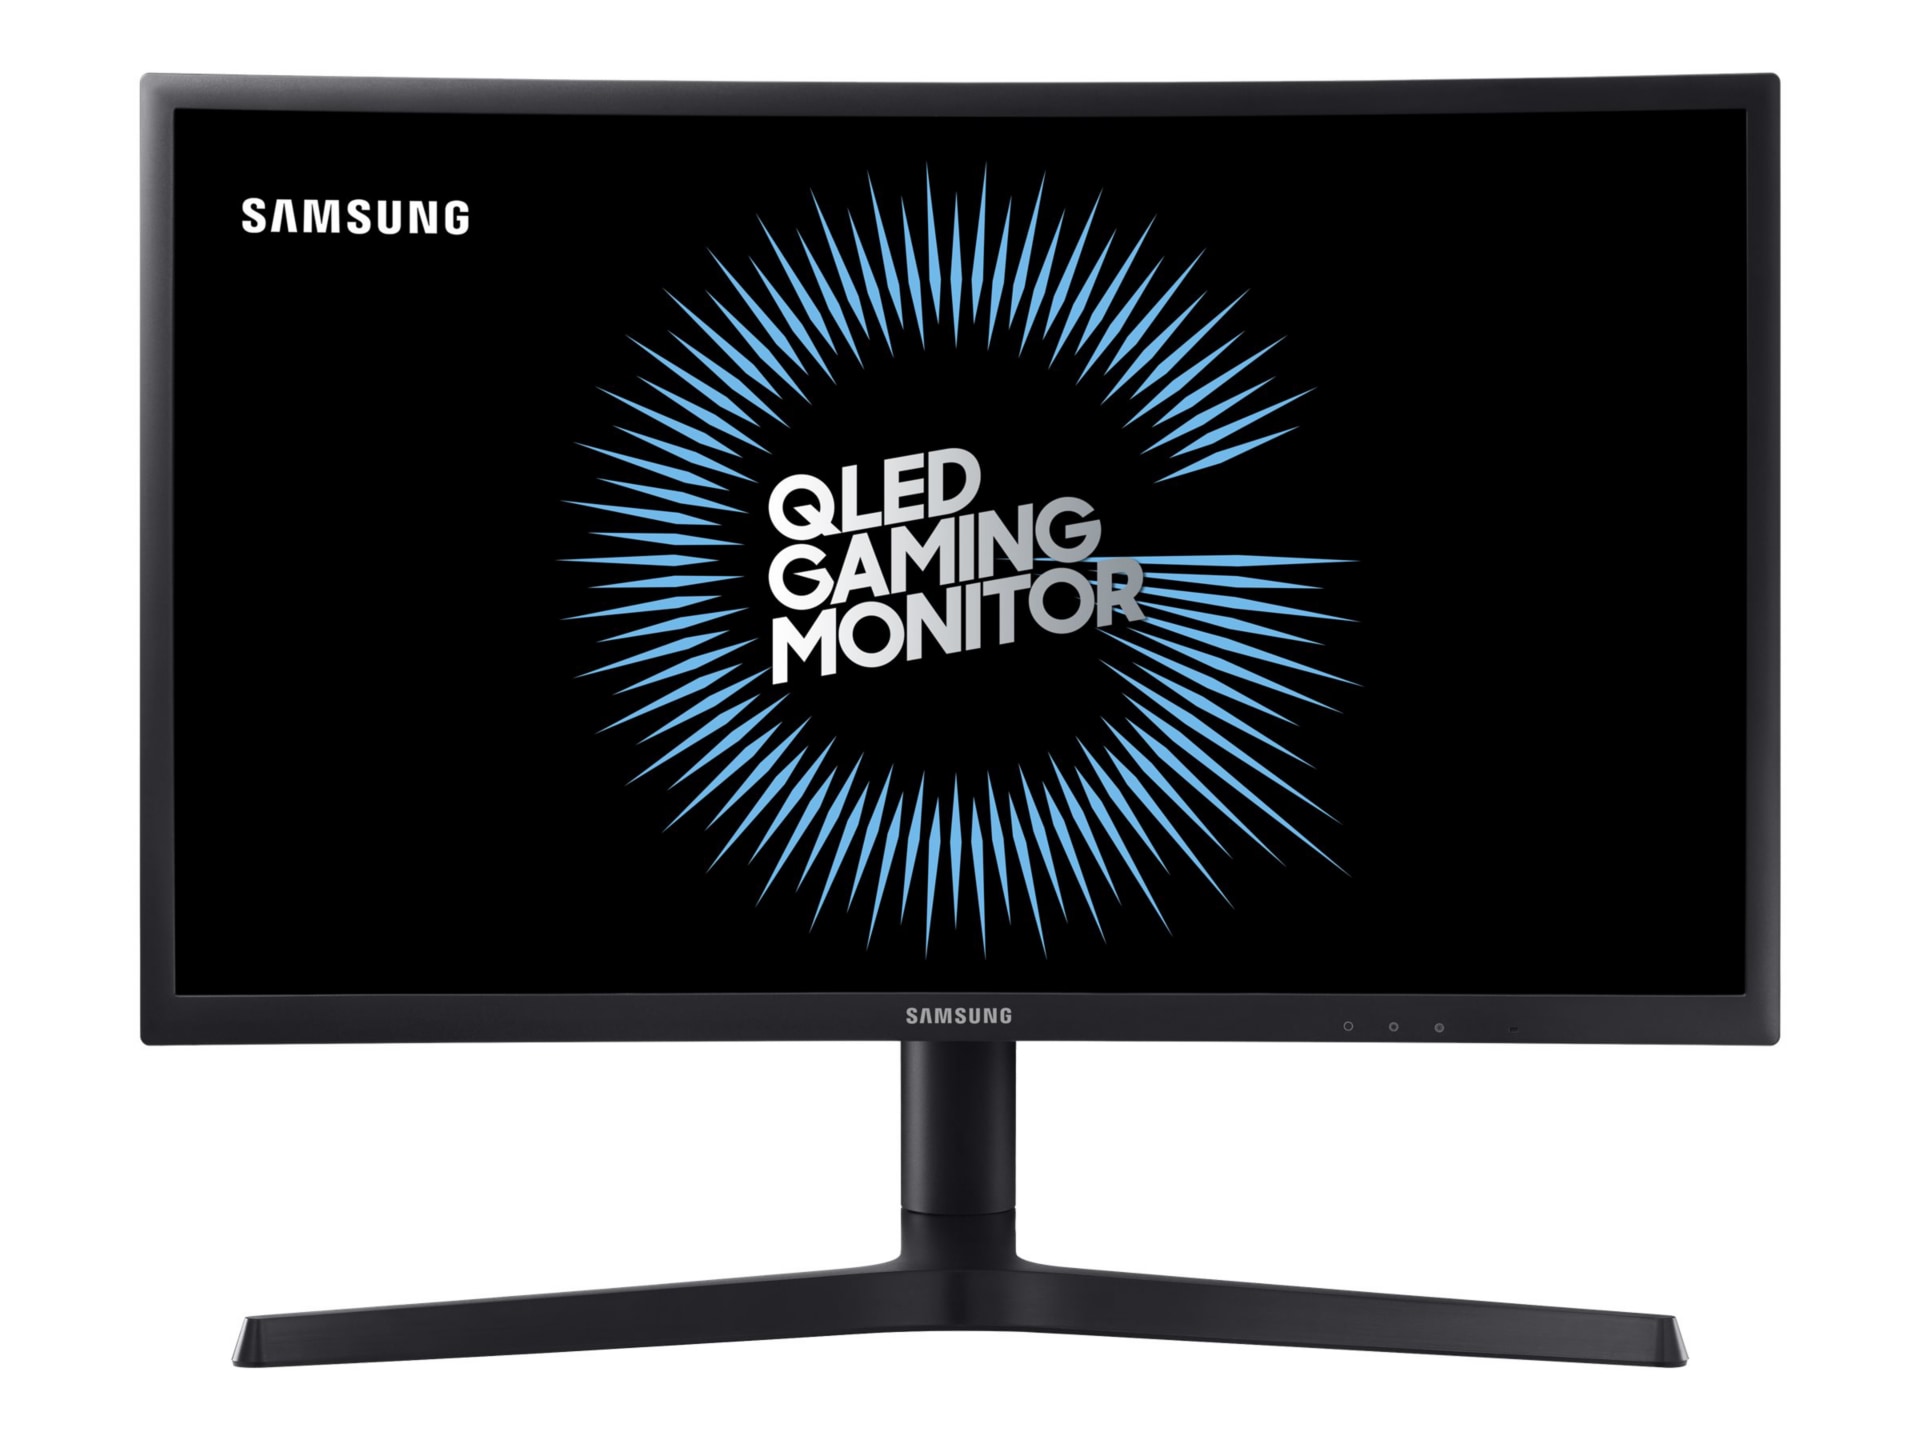 Samsung CFG7 Series C27FG73FQN - LED monitor - curved - Full HD (1080p) - 2